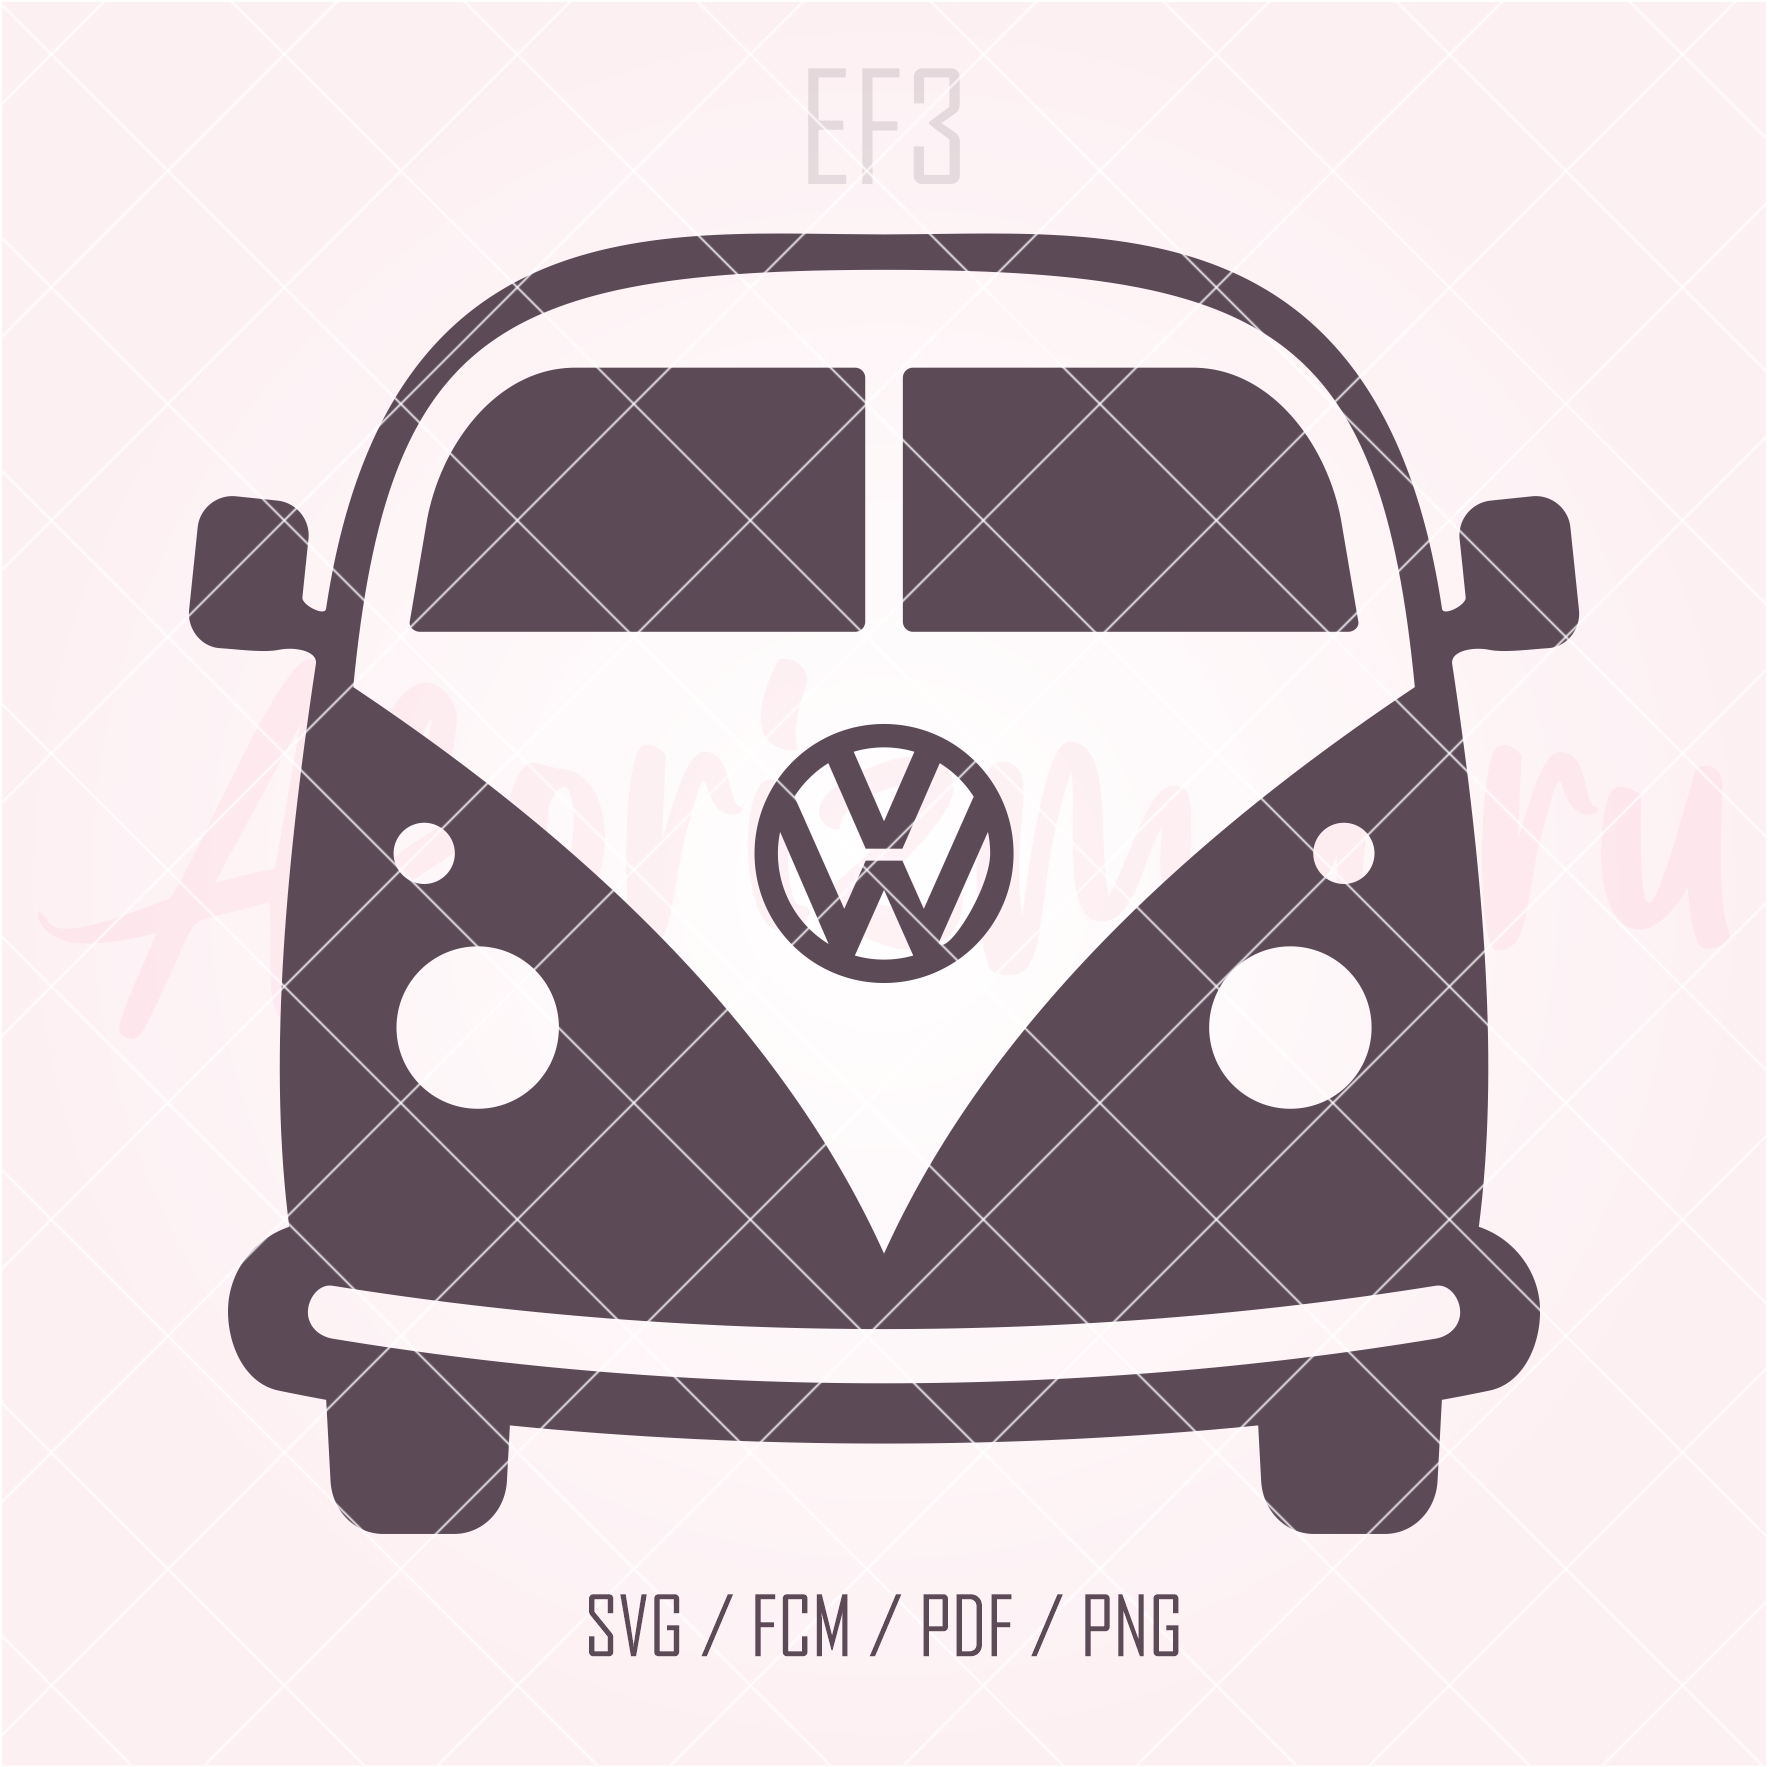 (EF3) VW